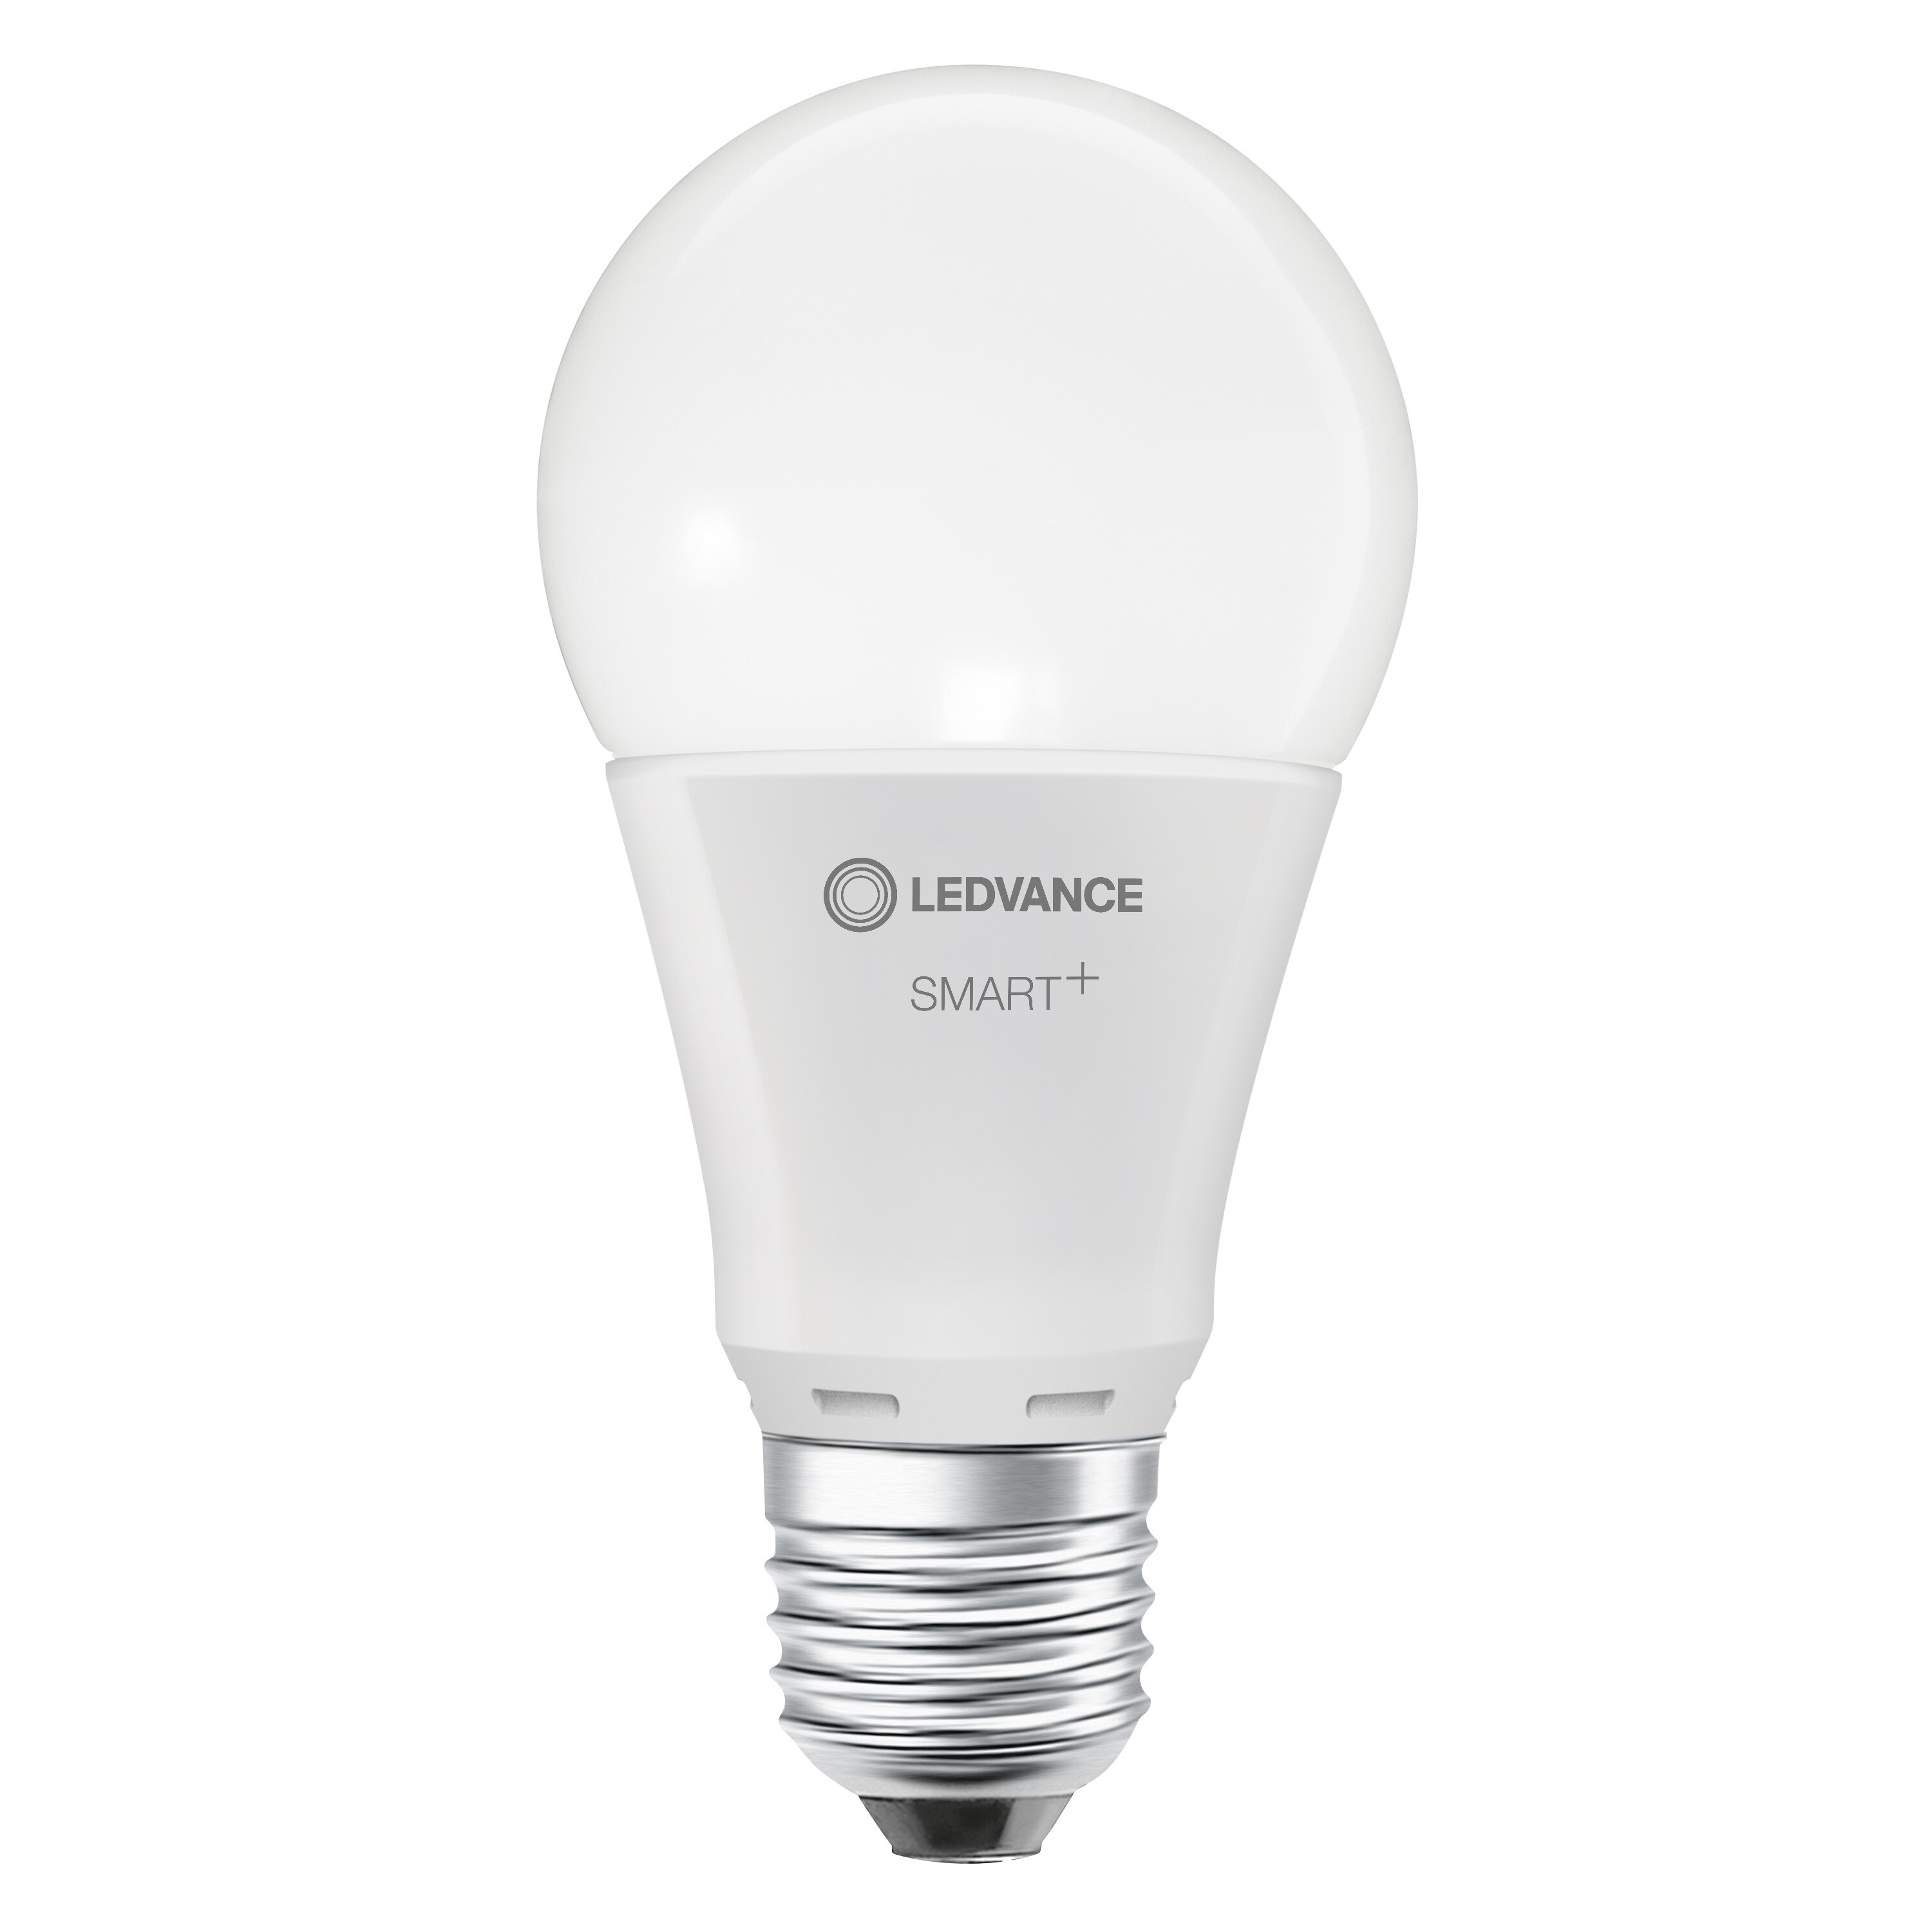 Tunable LED LEDVANCE Lampe Classic Lichtfarbe SMART+ White änderbar WiFi